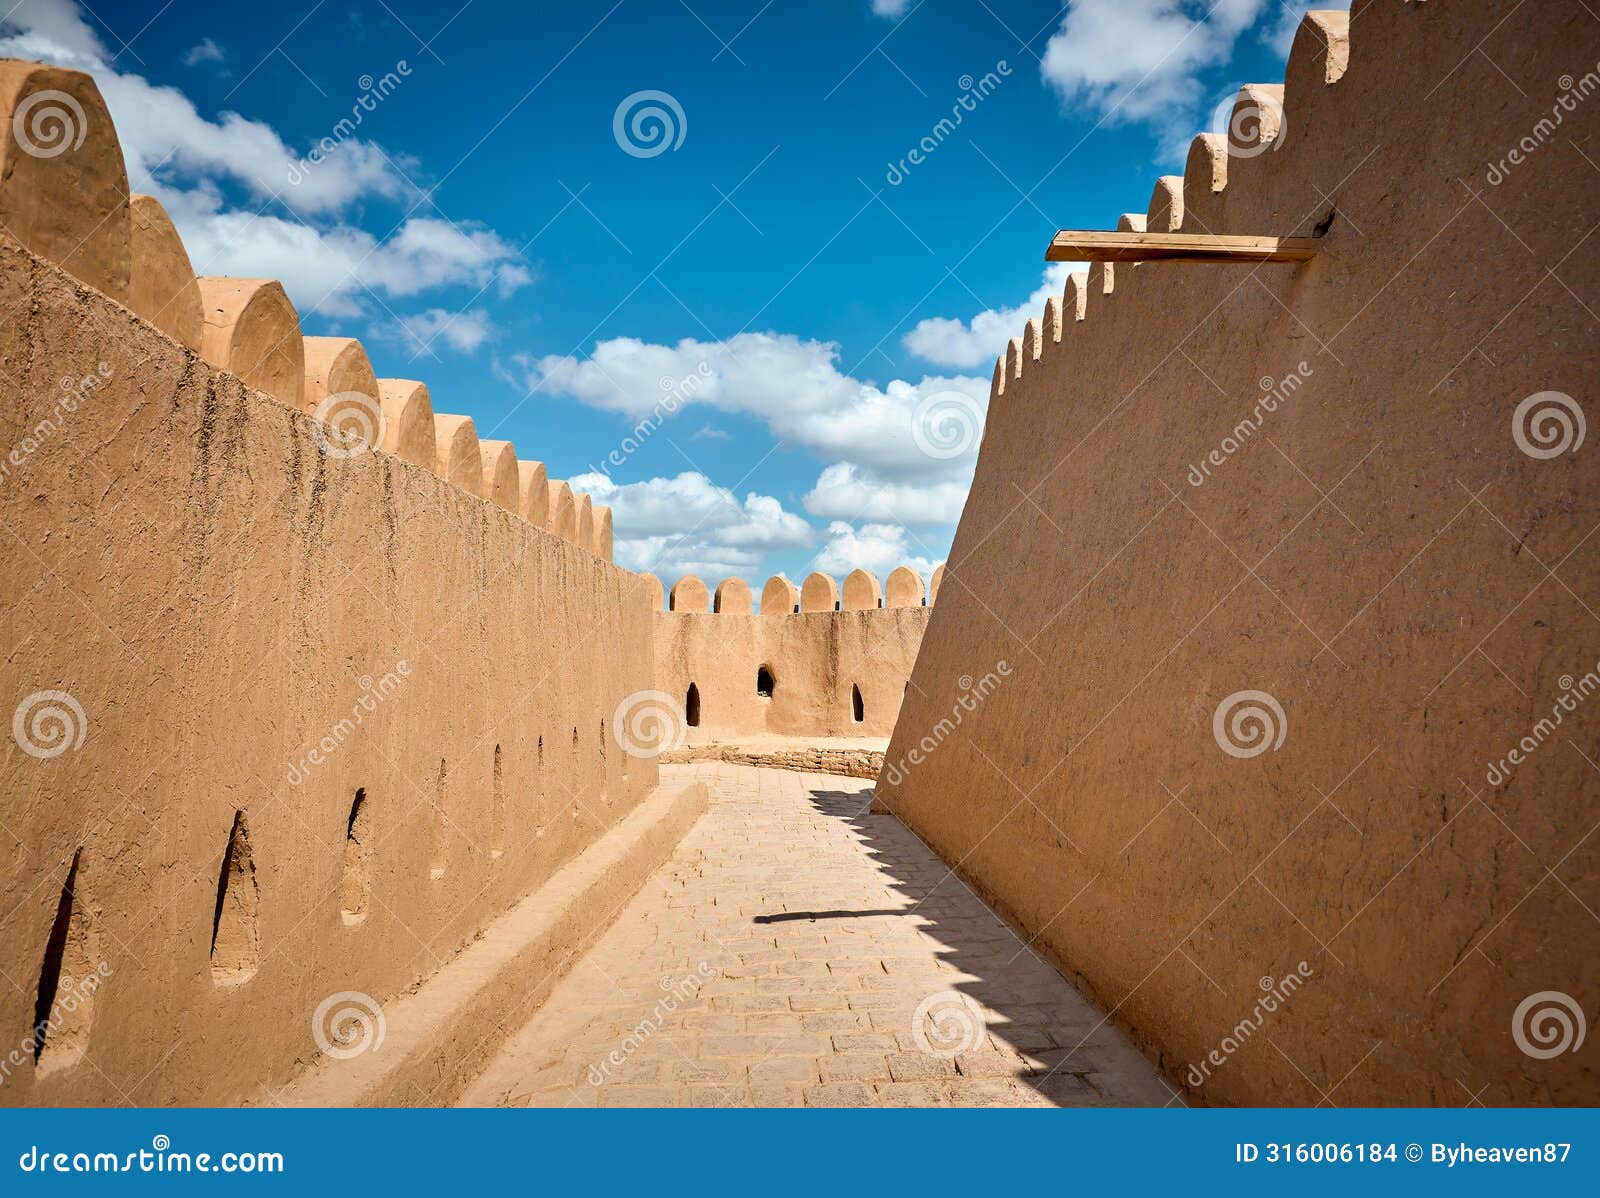 city walls of the ancient city of khiva uzbekistan